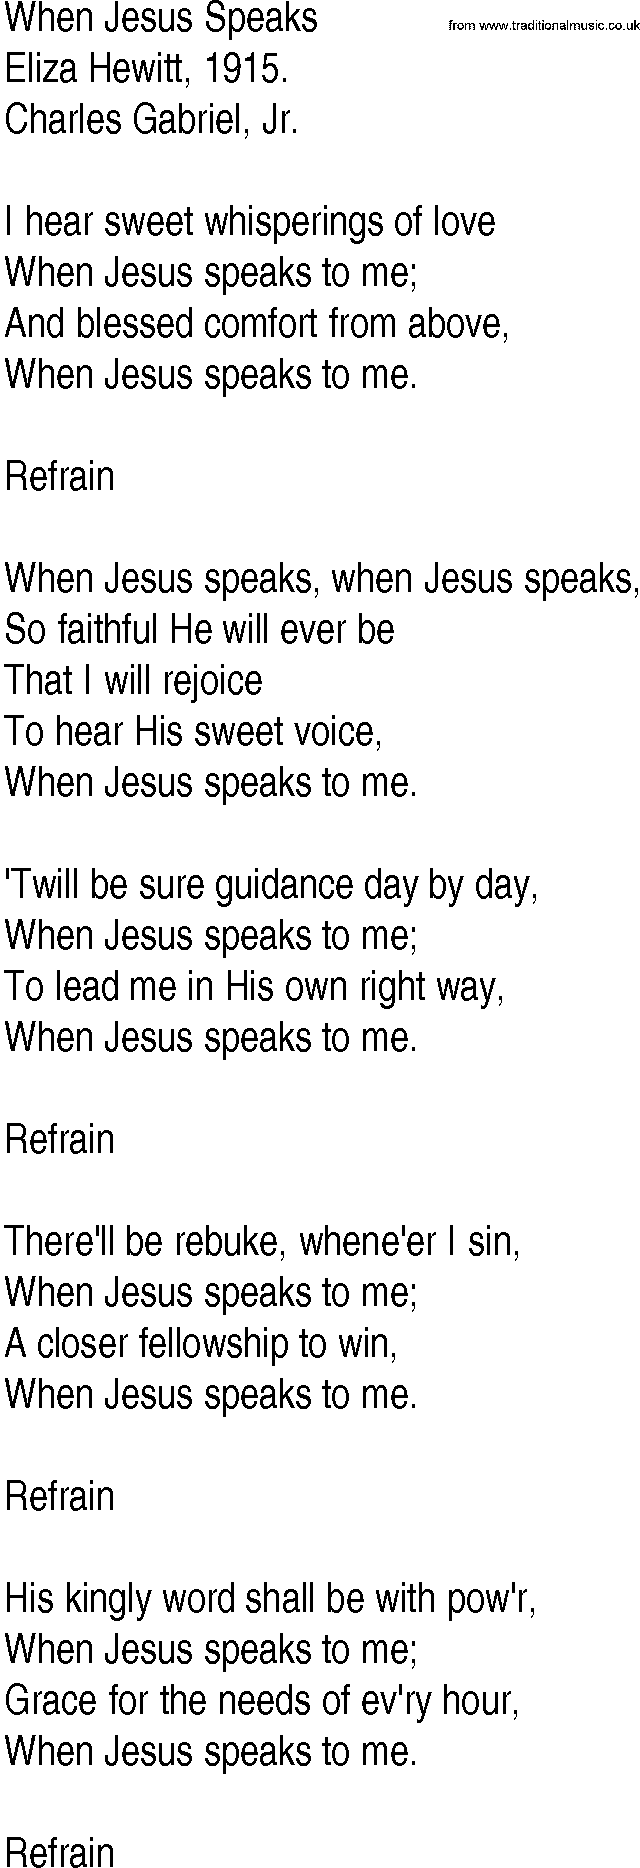 Hymn and Gospel Song: When Jesus Speaks by Eliza Hewitt lyrics